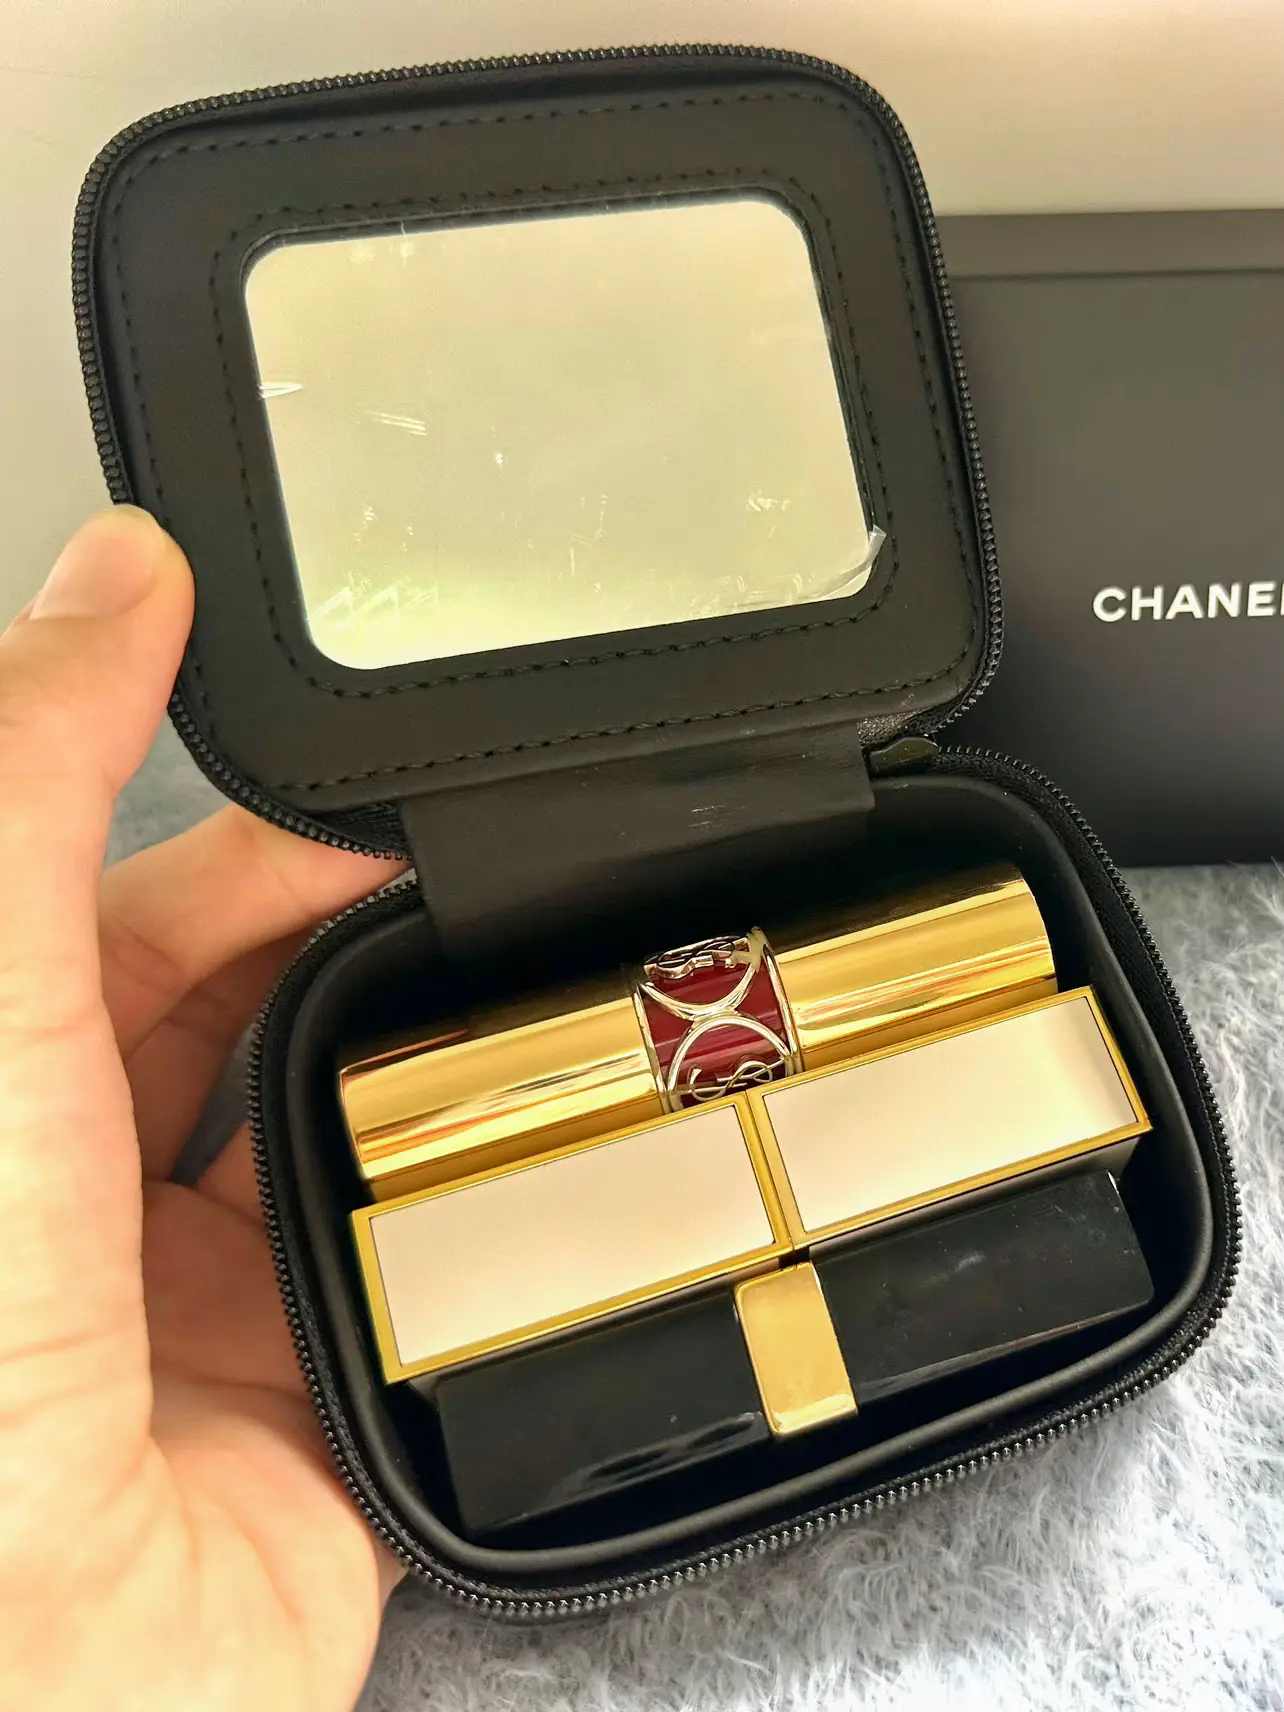 Chanel Lipstick Holder Chanel